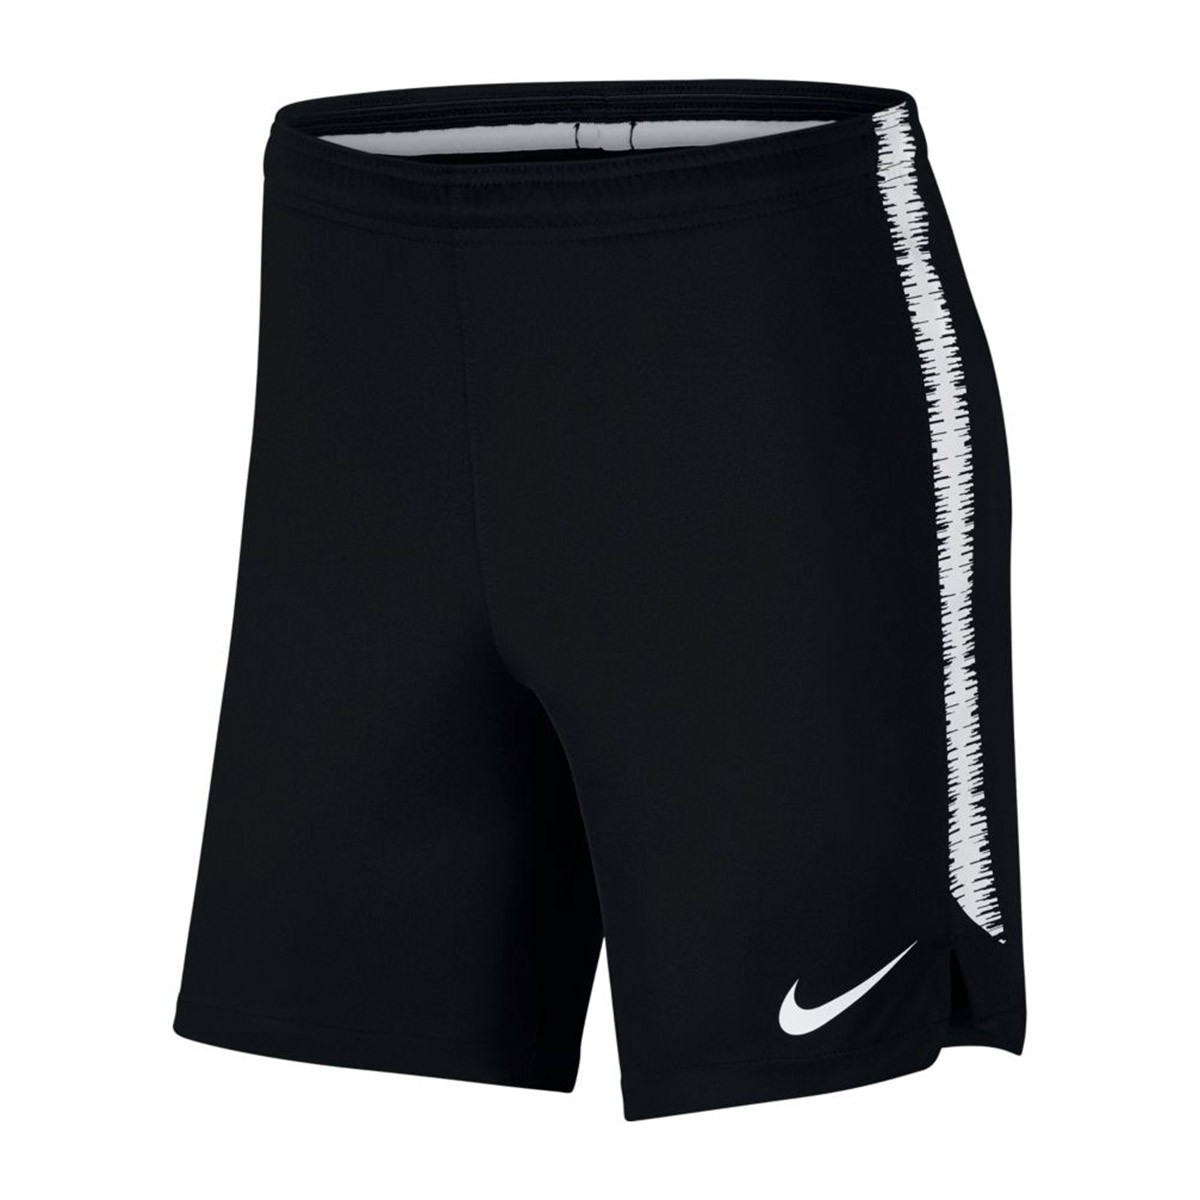 Short Nike Dry Squad Black-White - Tienda de fútbol Fútbol Emotion